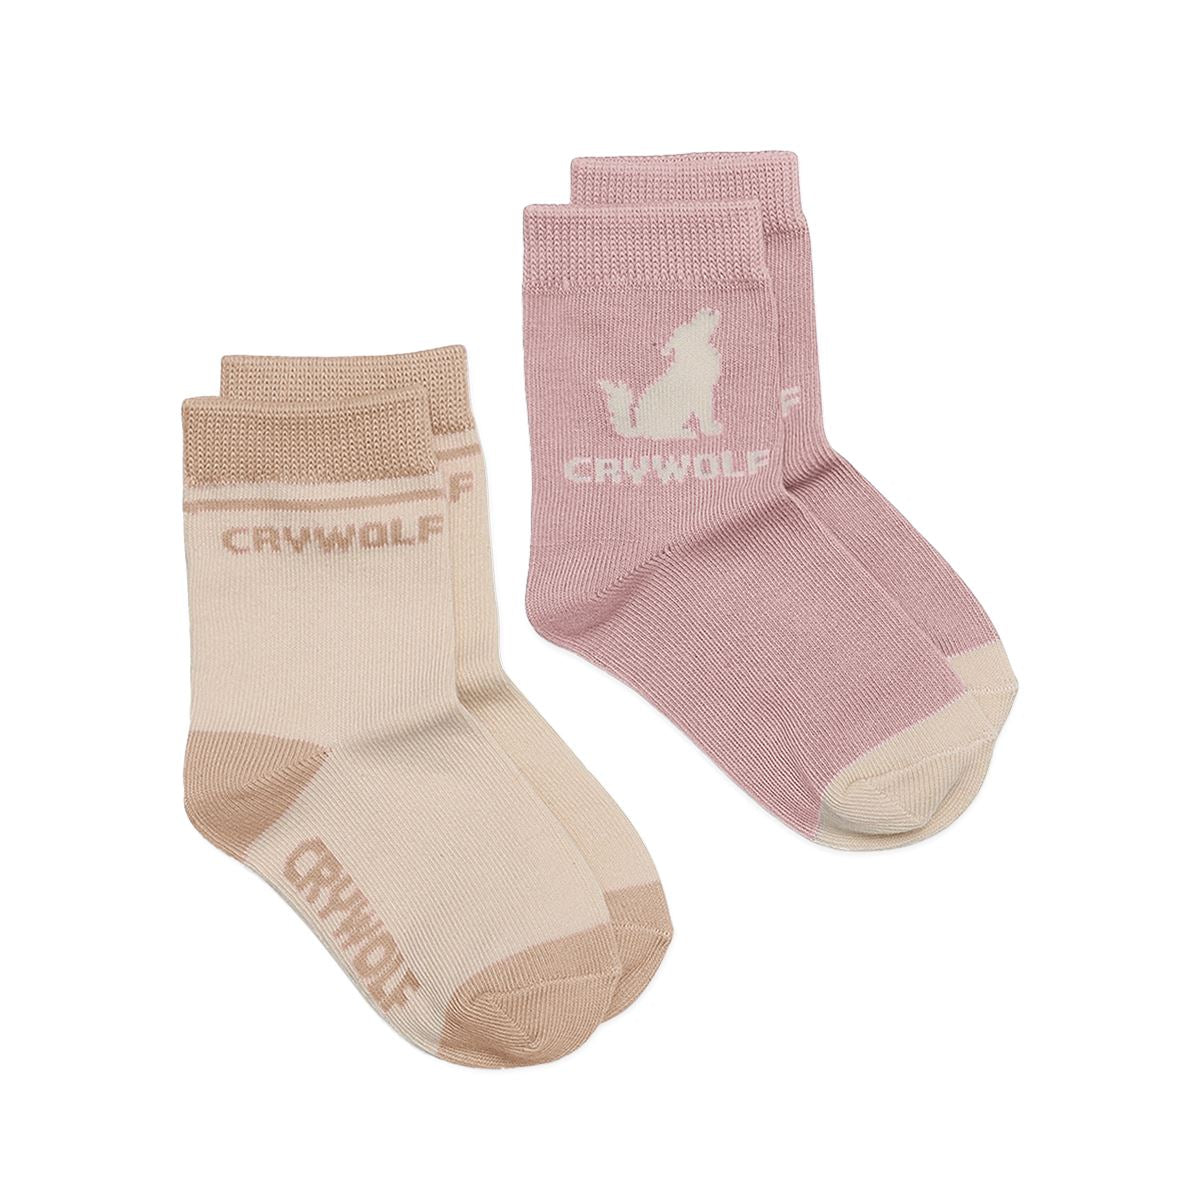 Crywolf Sock 2-Pack - Blush/Camel Socks Crywolf 